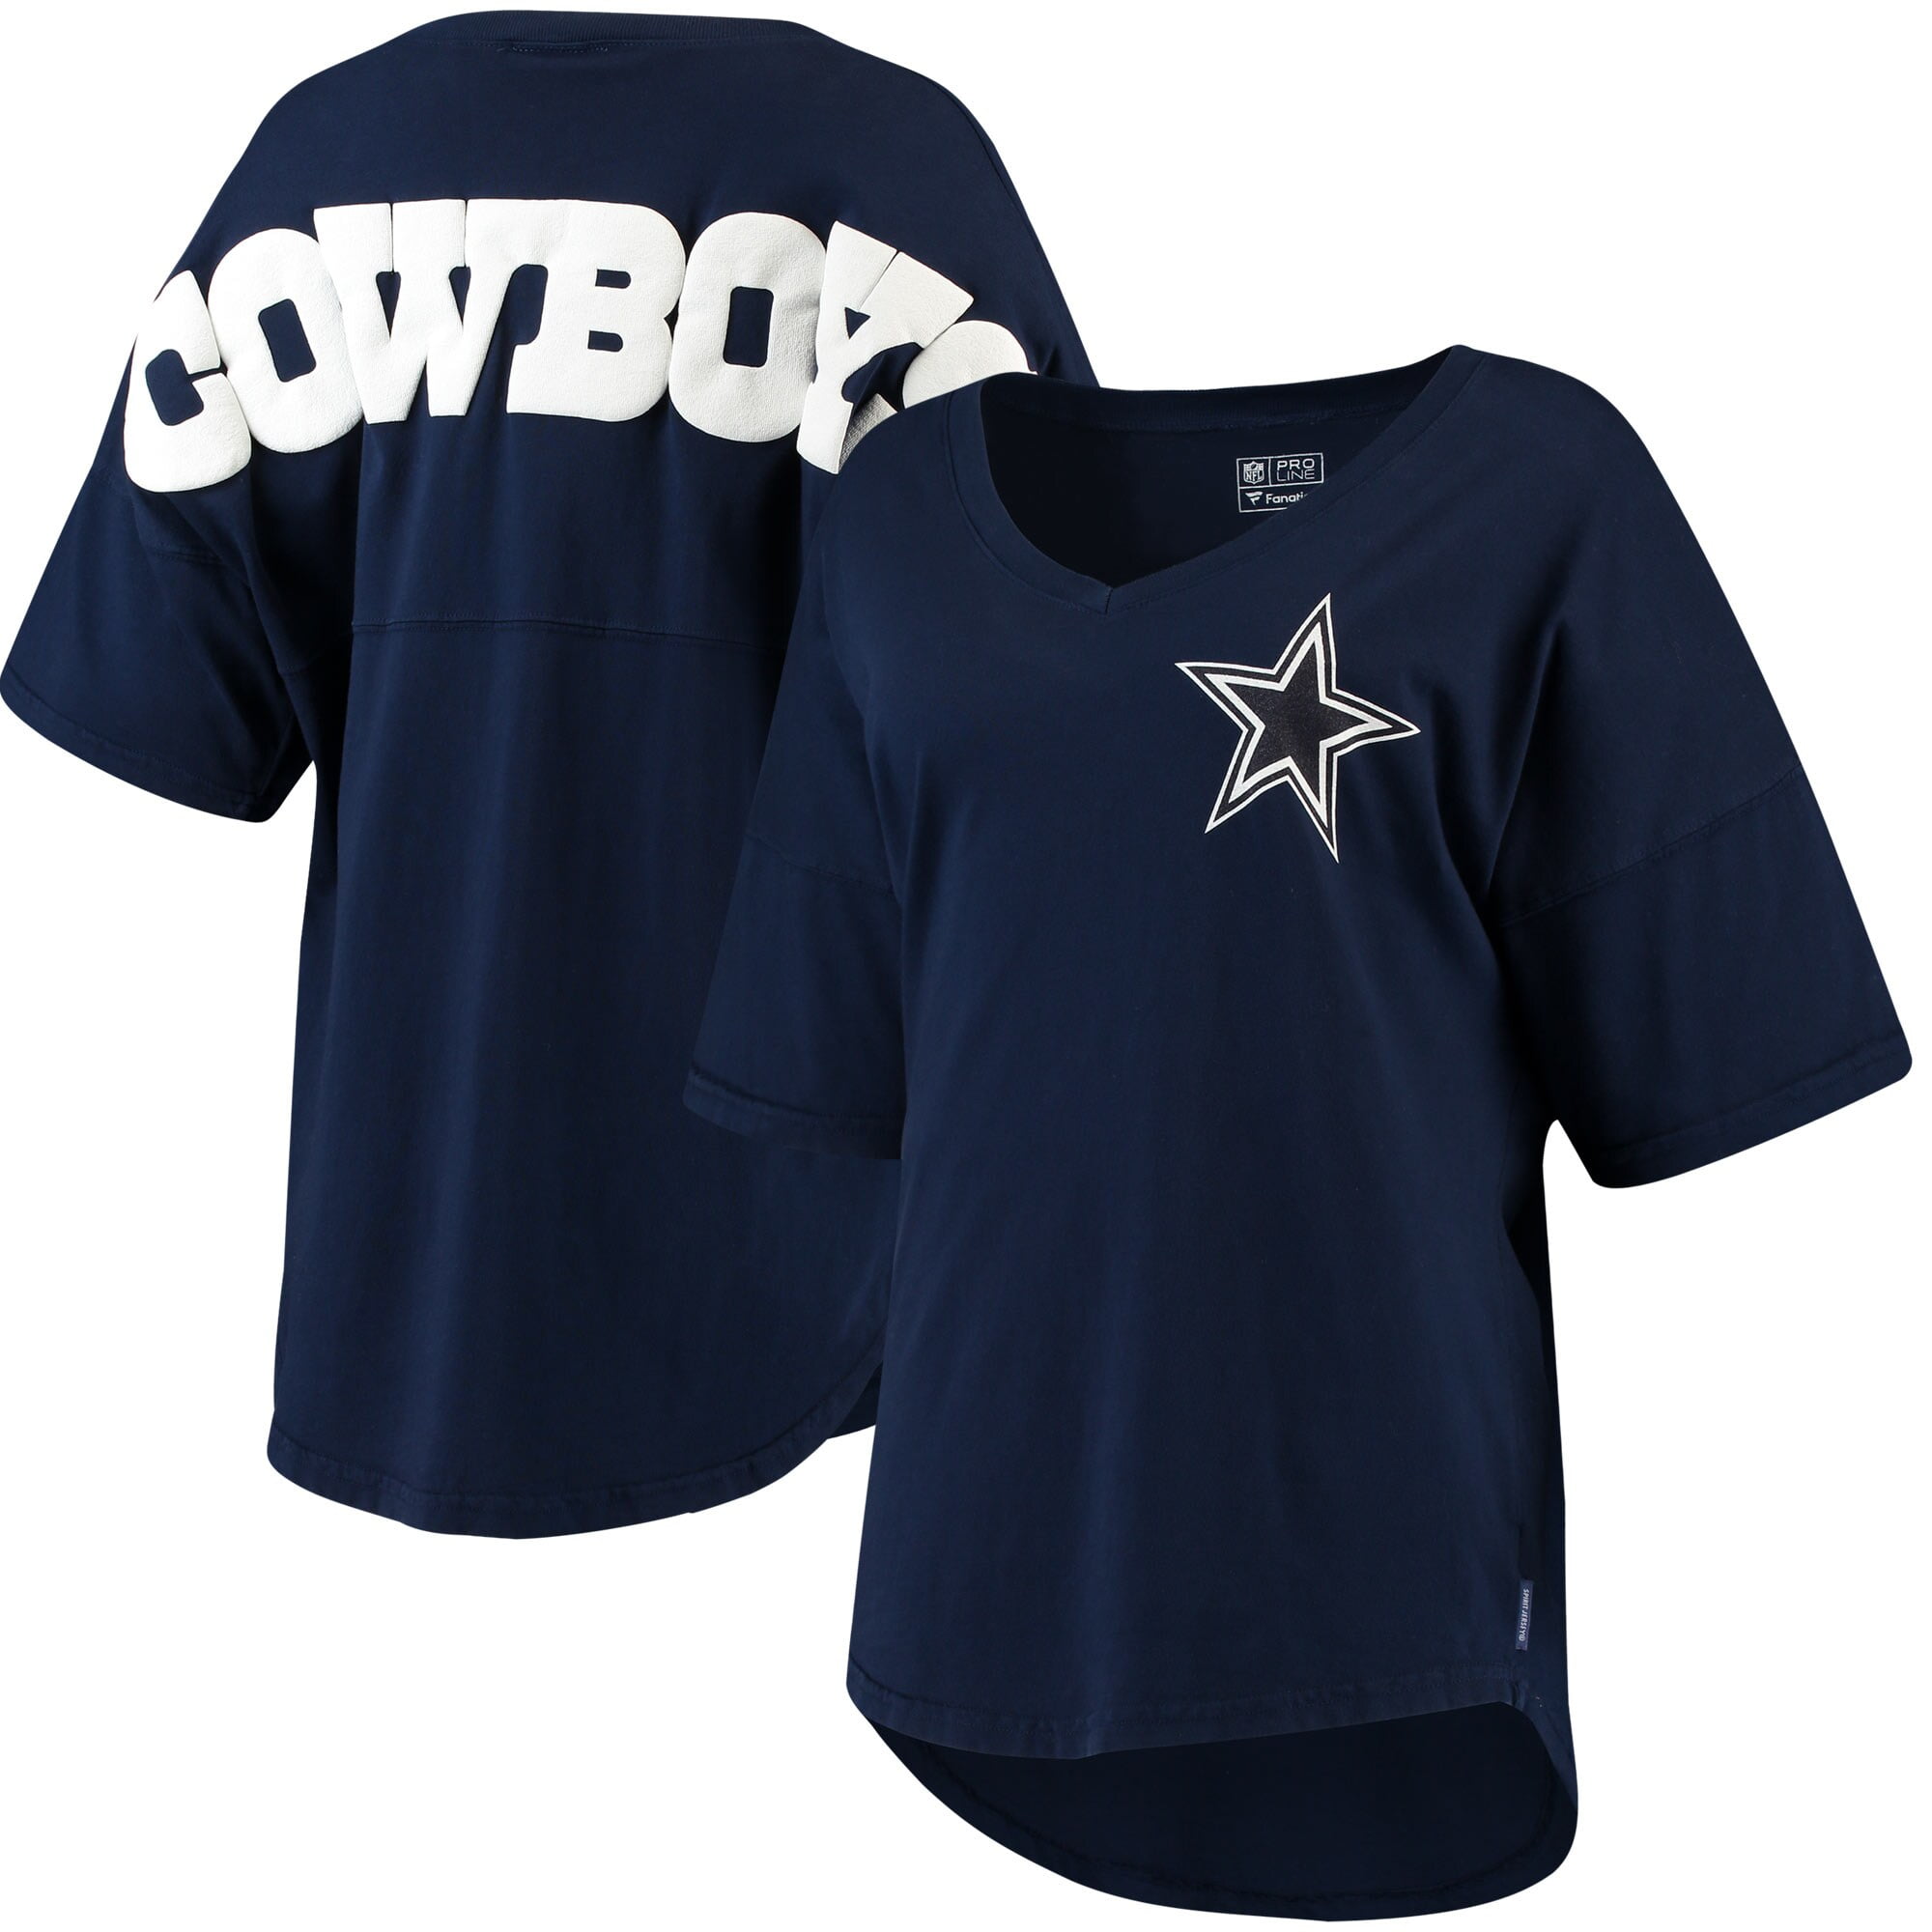 cowboys t shirt jersey